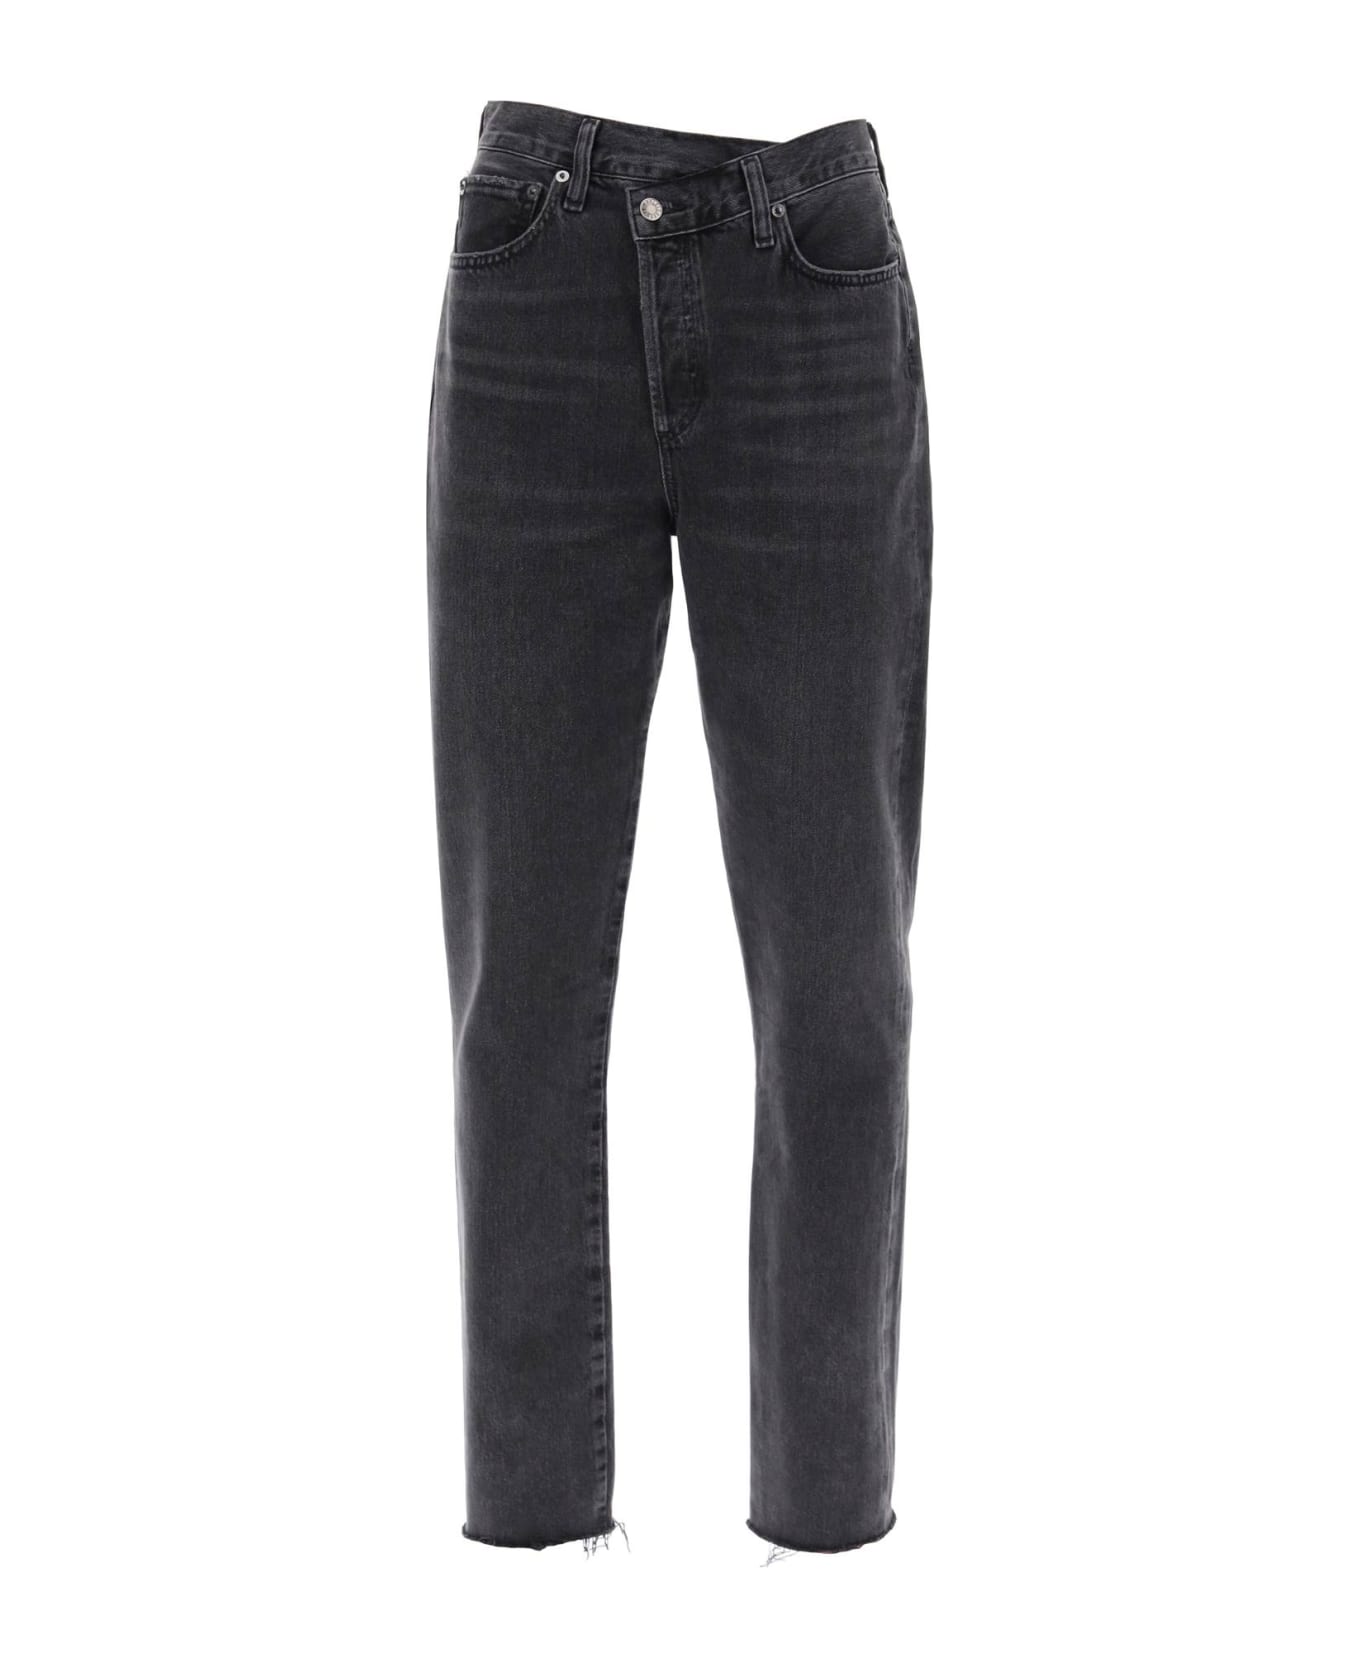 AGOLDE Offset Waistband Jeans - SHAMBLES (Black)